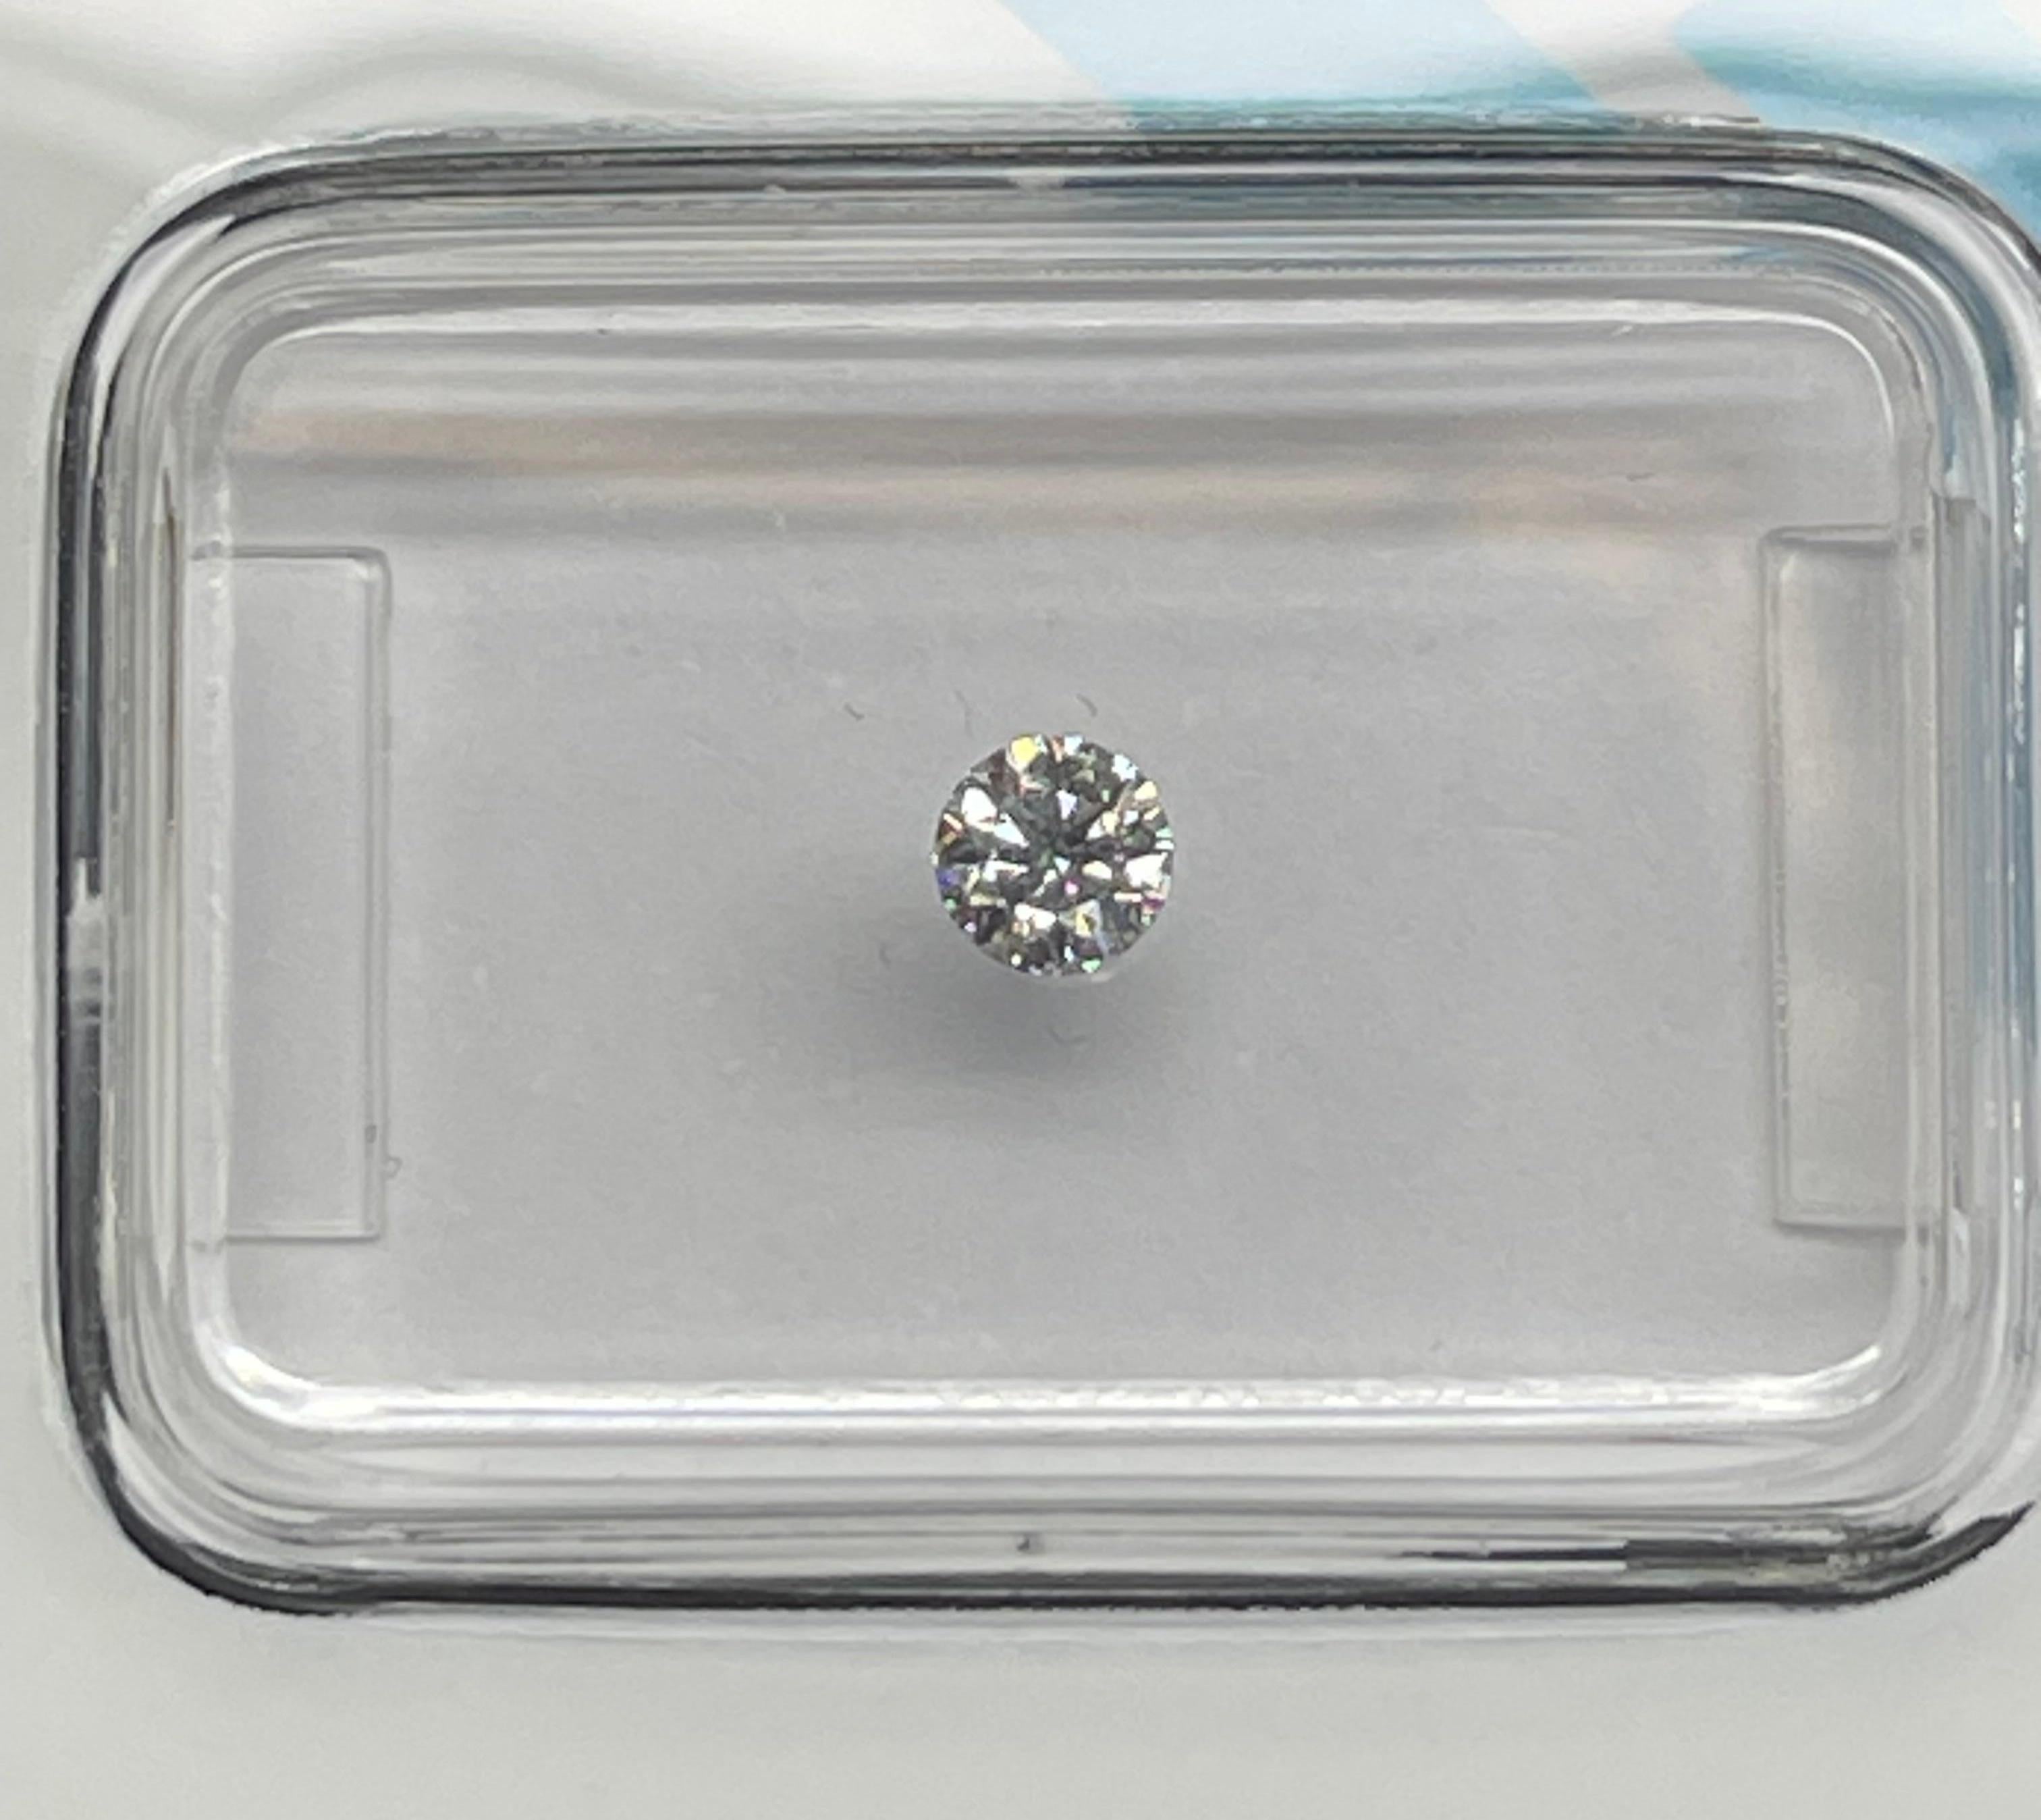 Natural Diamond graded by IGI.

Shape: Round Brilliant
Weight: 0.15 CT
Color: D
Clarity: VVS2
Cut: Very Good
Polish: Excellent
Symmetry: Excellent
Fluorescence: None
Laser inscription : IGI 630434203